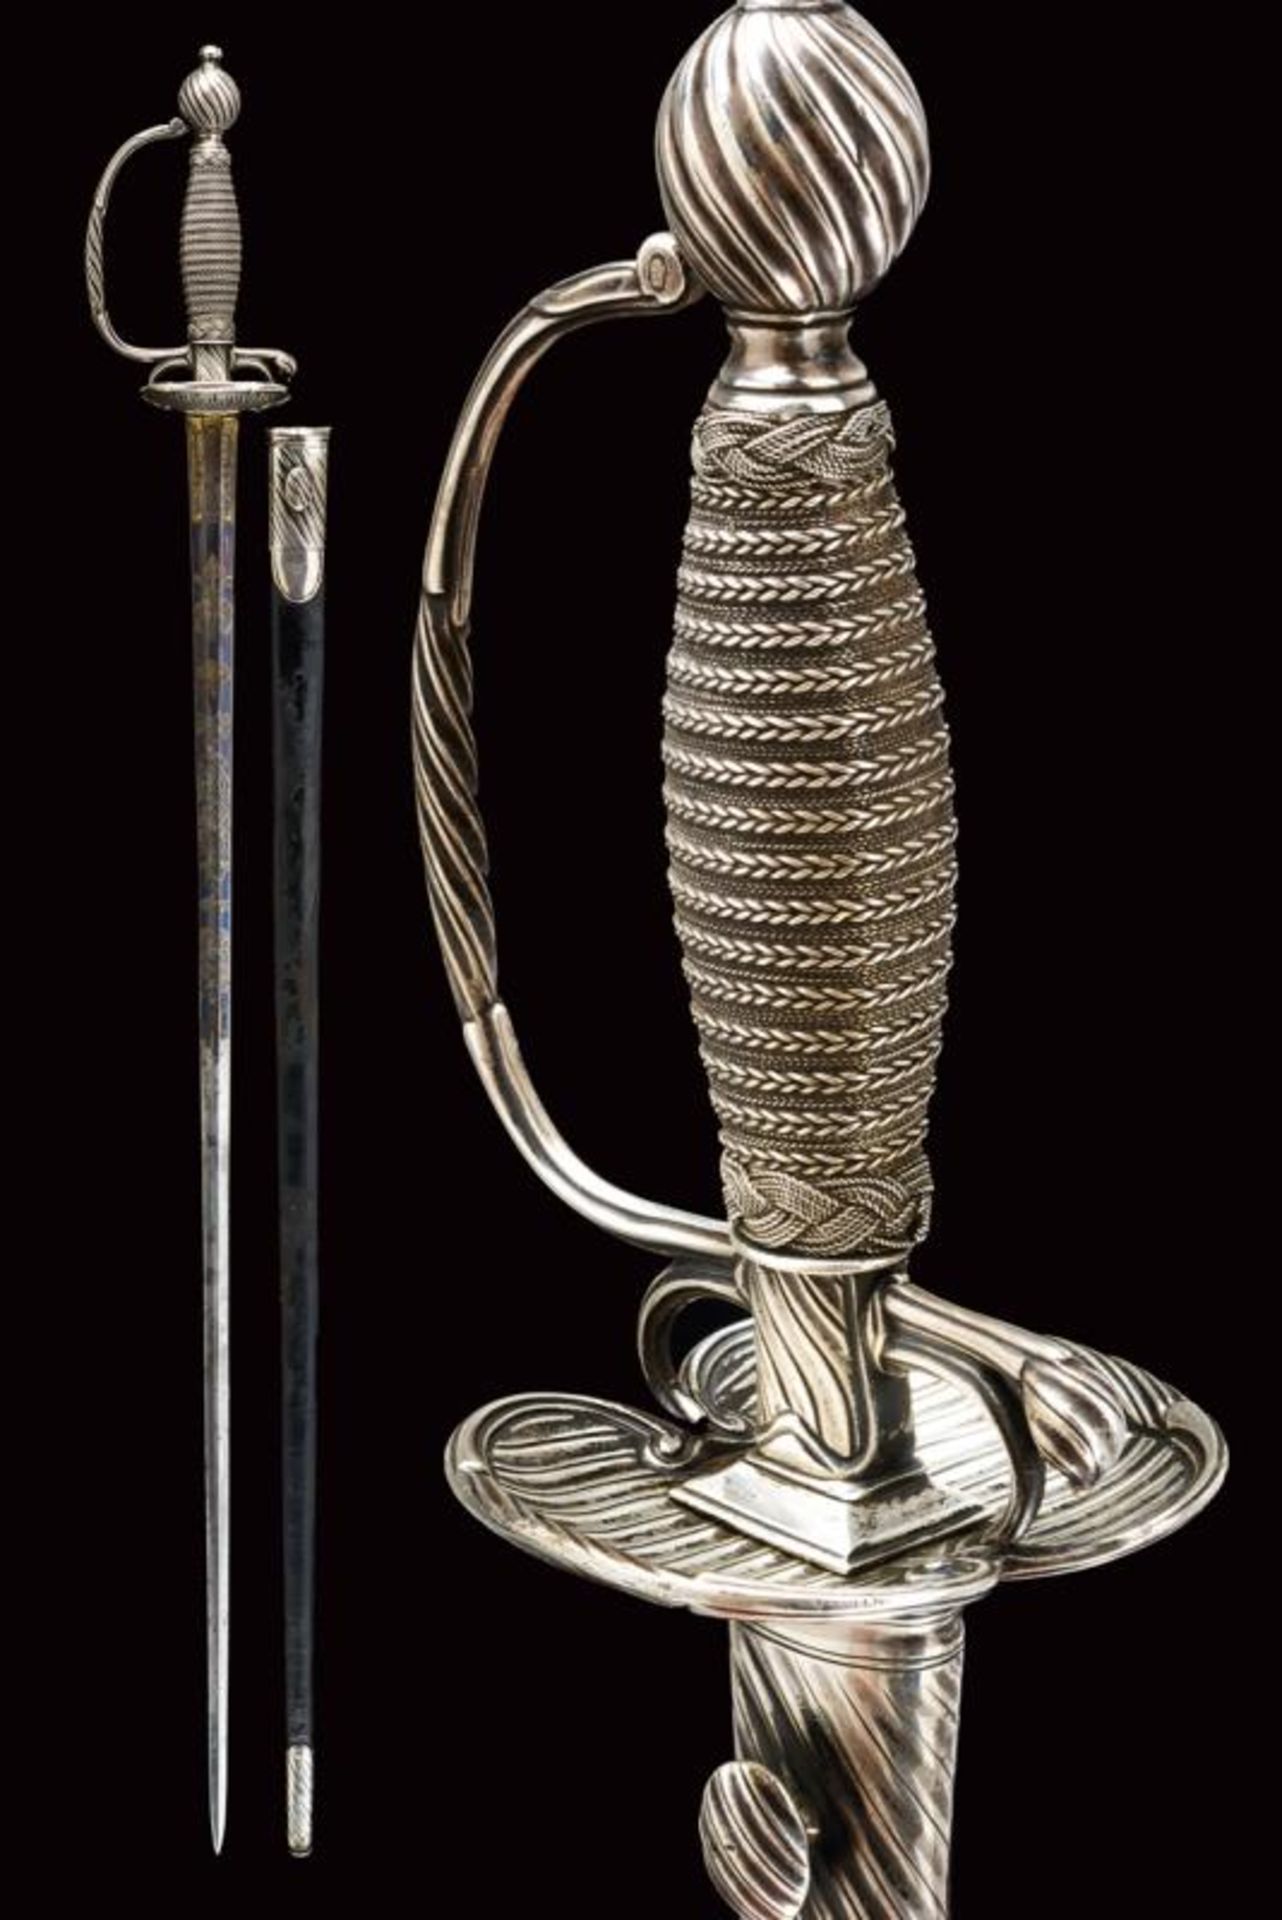 A beautiful 1774 model senior officer's small sword